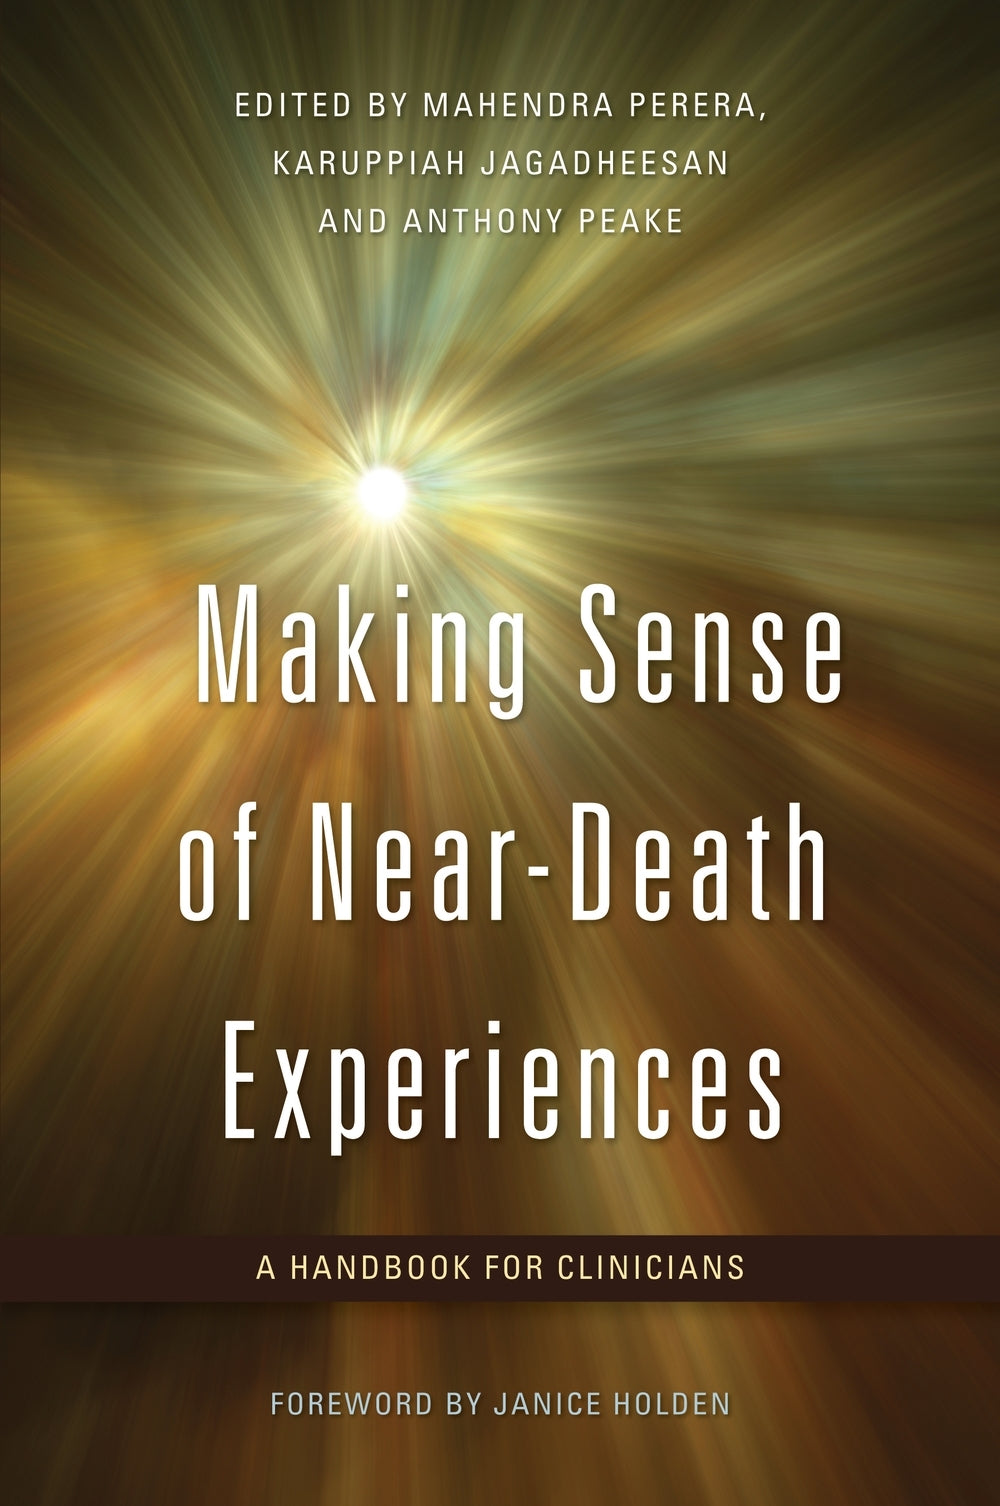 Making Sense of Near-Death Experiences by Anthony Peake, Karuppiah Jagadheesan, Mahendra Perera, No Author Listed